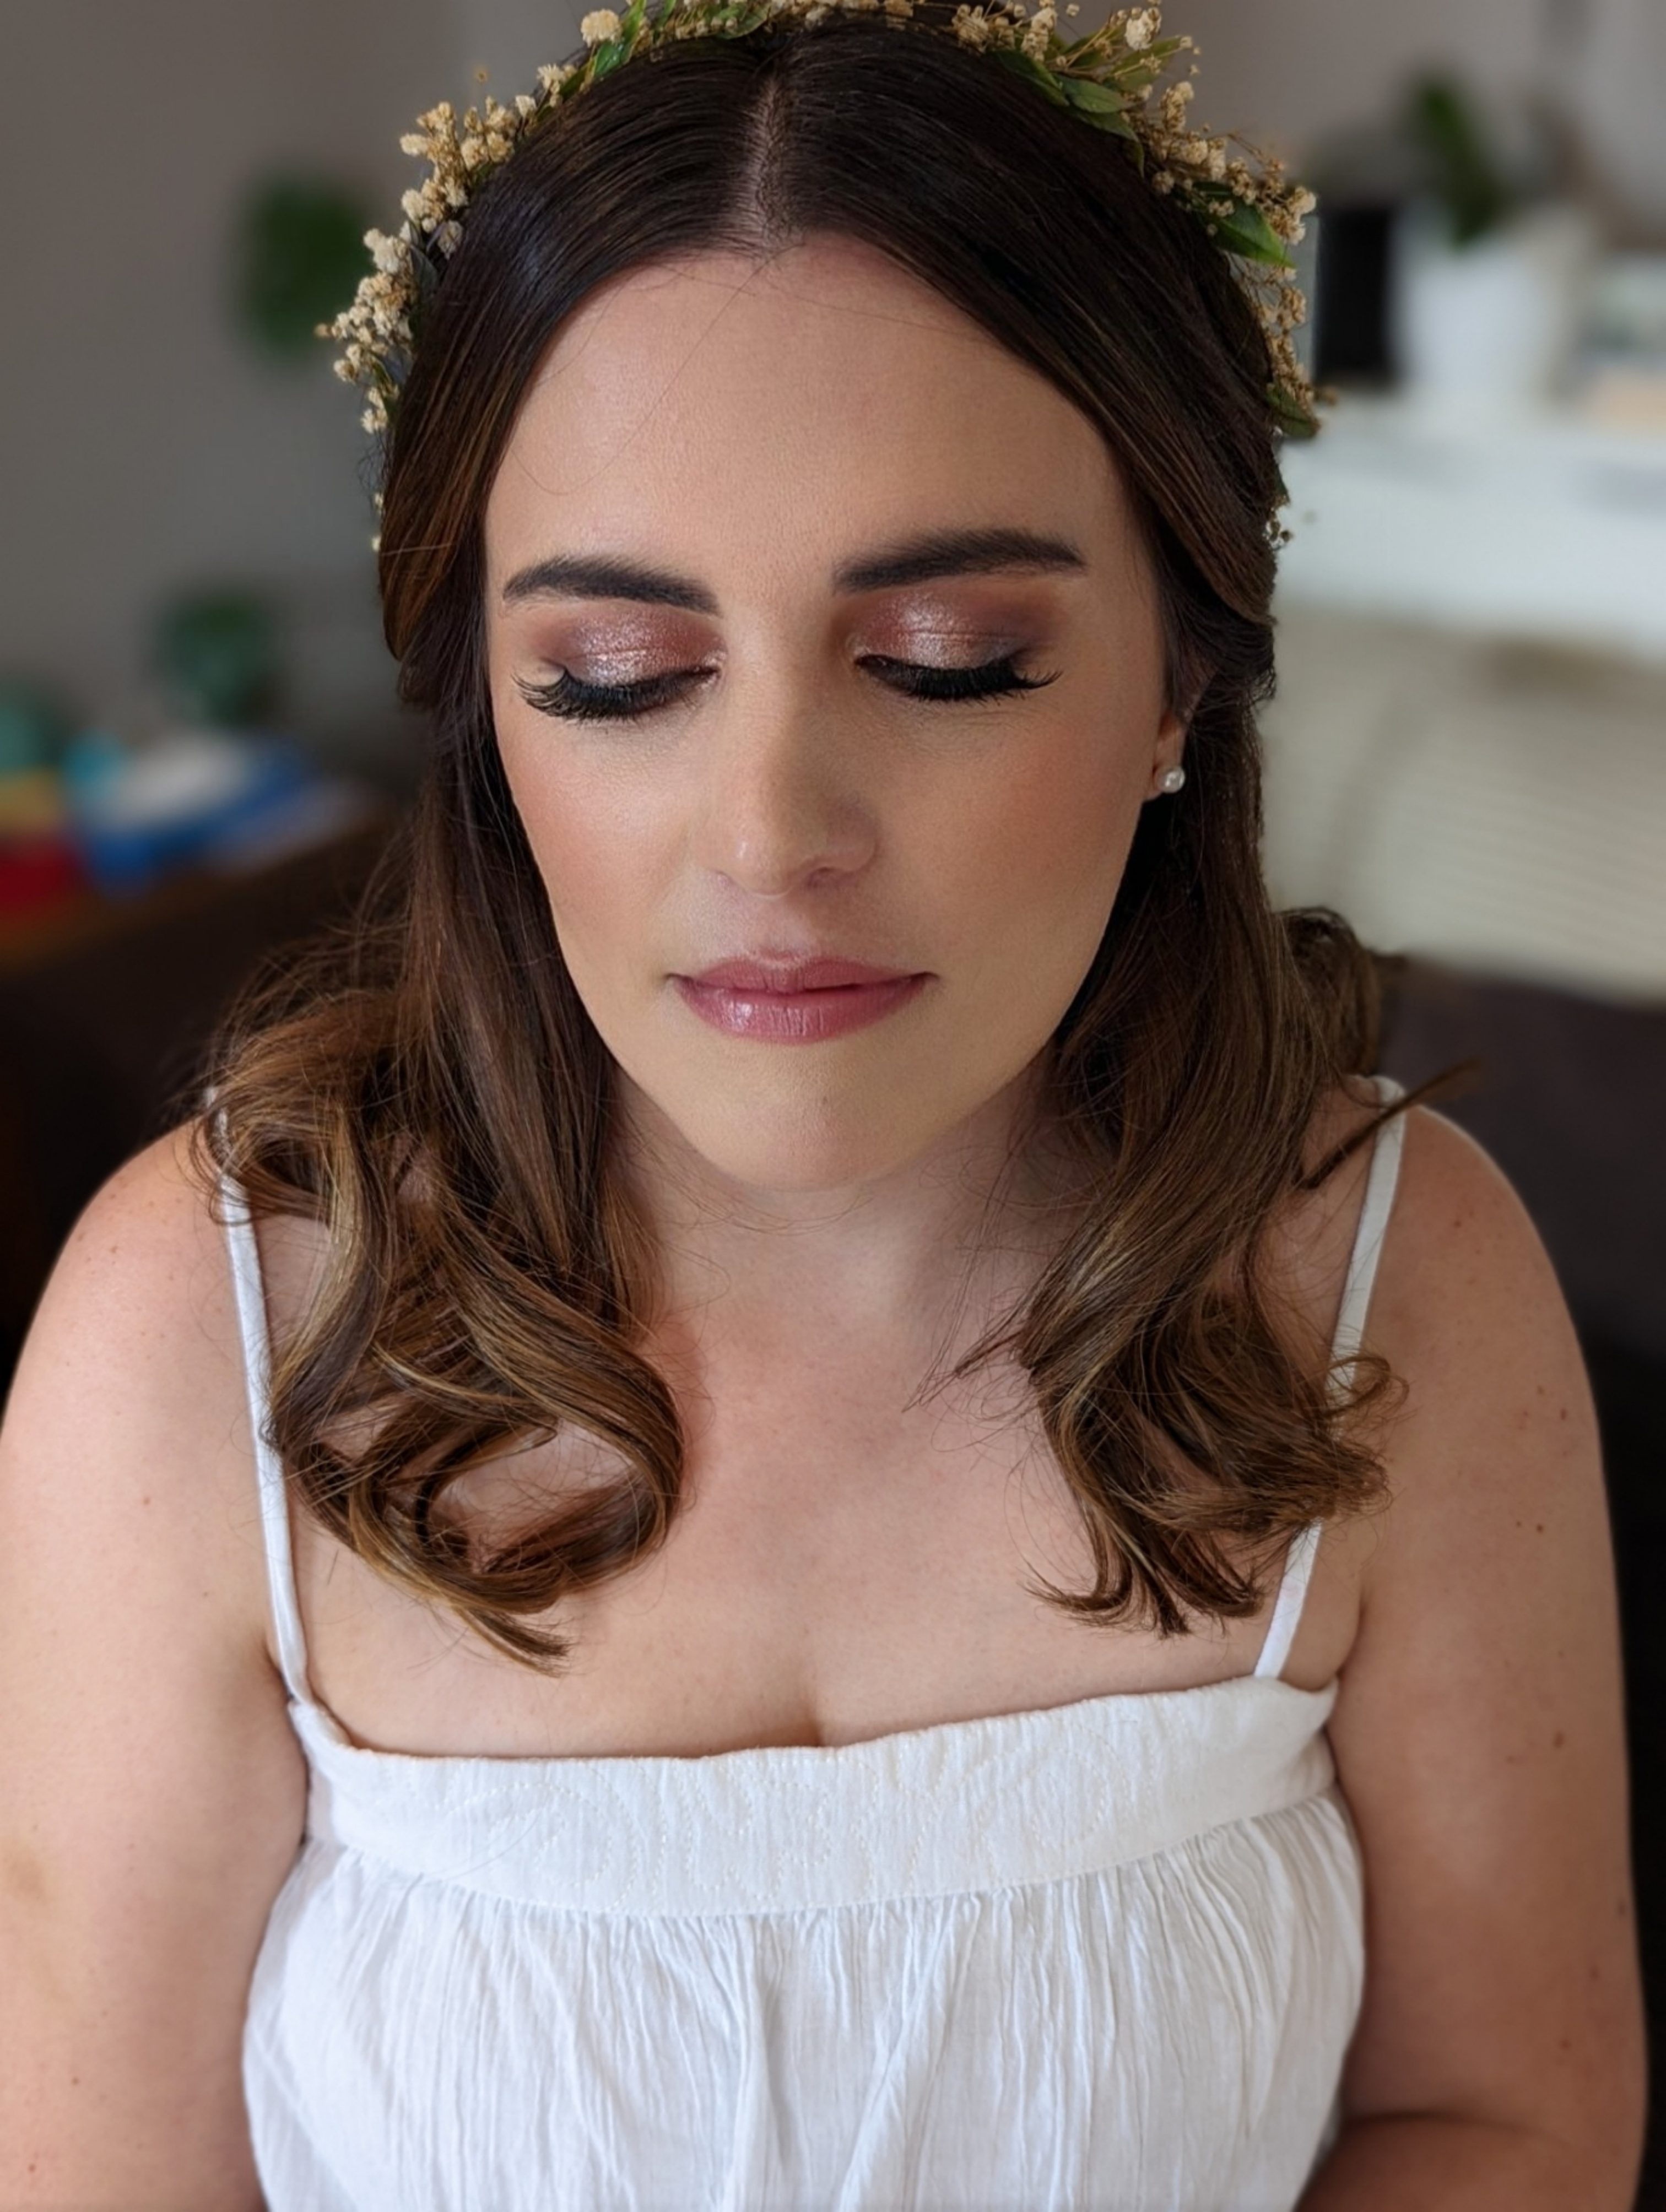 Specialist-Wedding-Makeup-Artist-Makeup-By-Mirna, Bridal makeup artist London, wedding makeup artist Hertfordshire